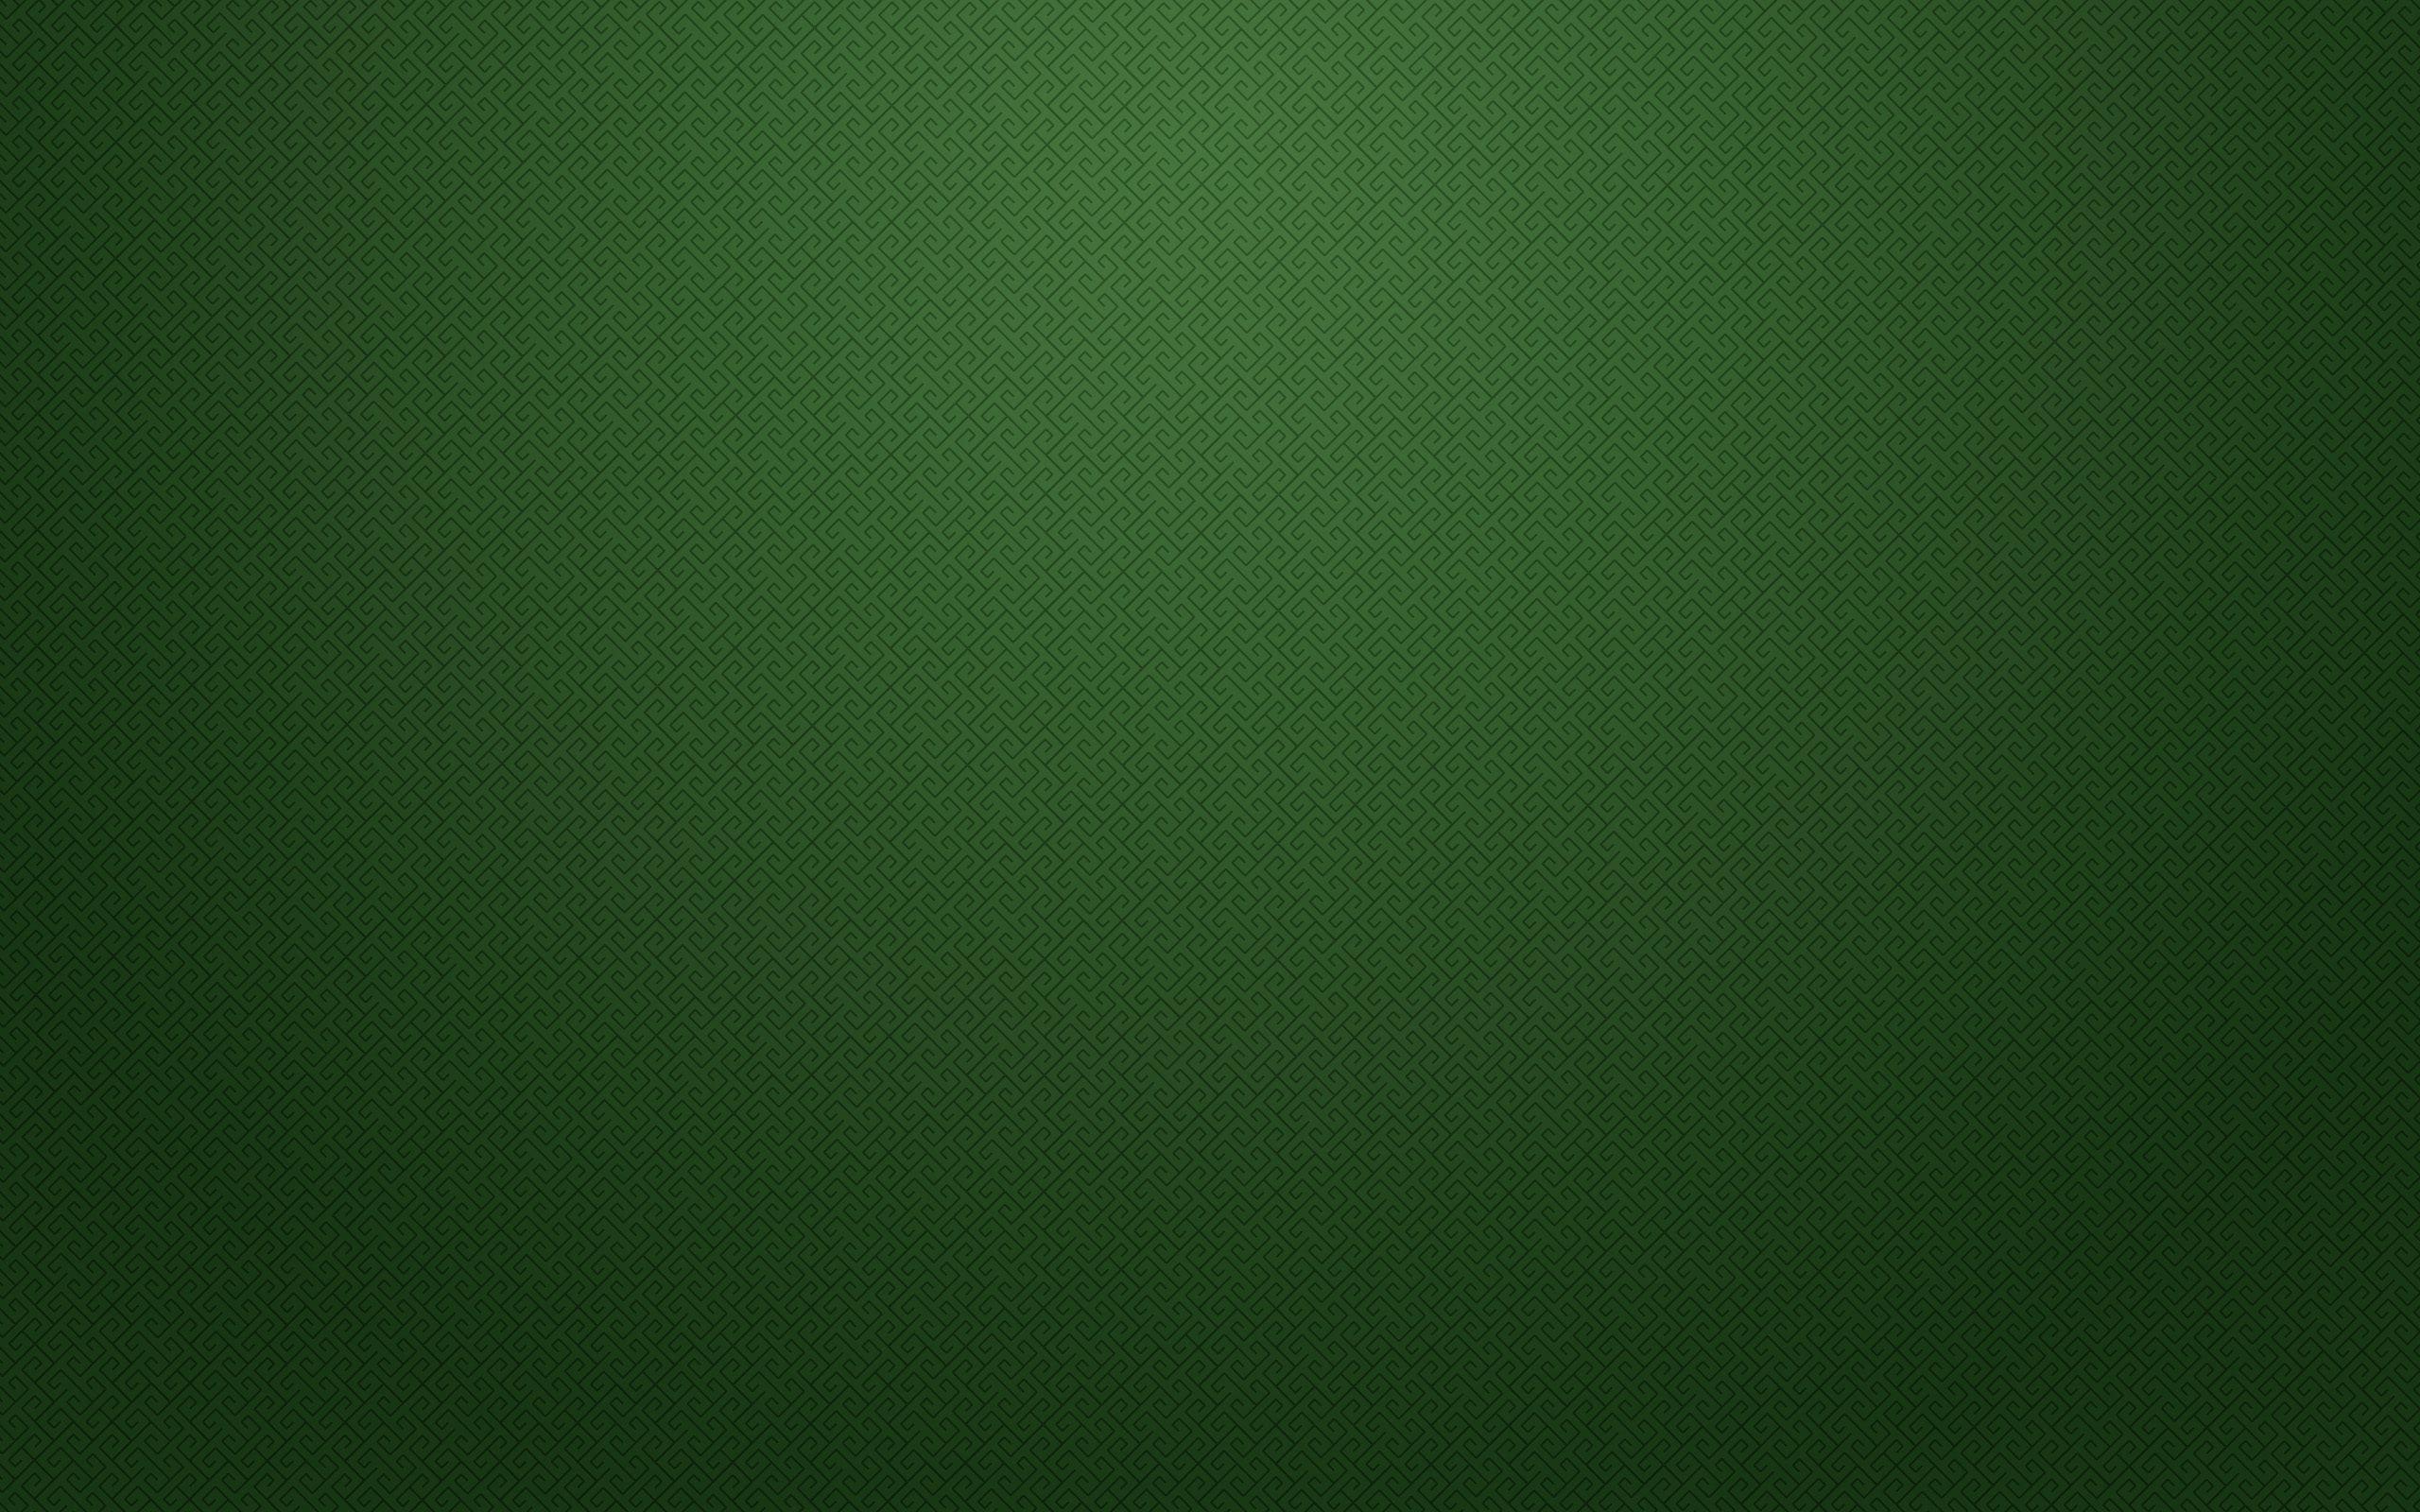 Fantastic Dark Green Wallpaper 41167 2560x1600 px